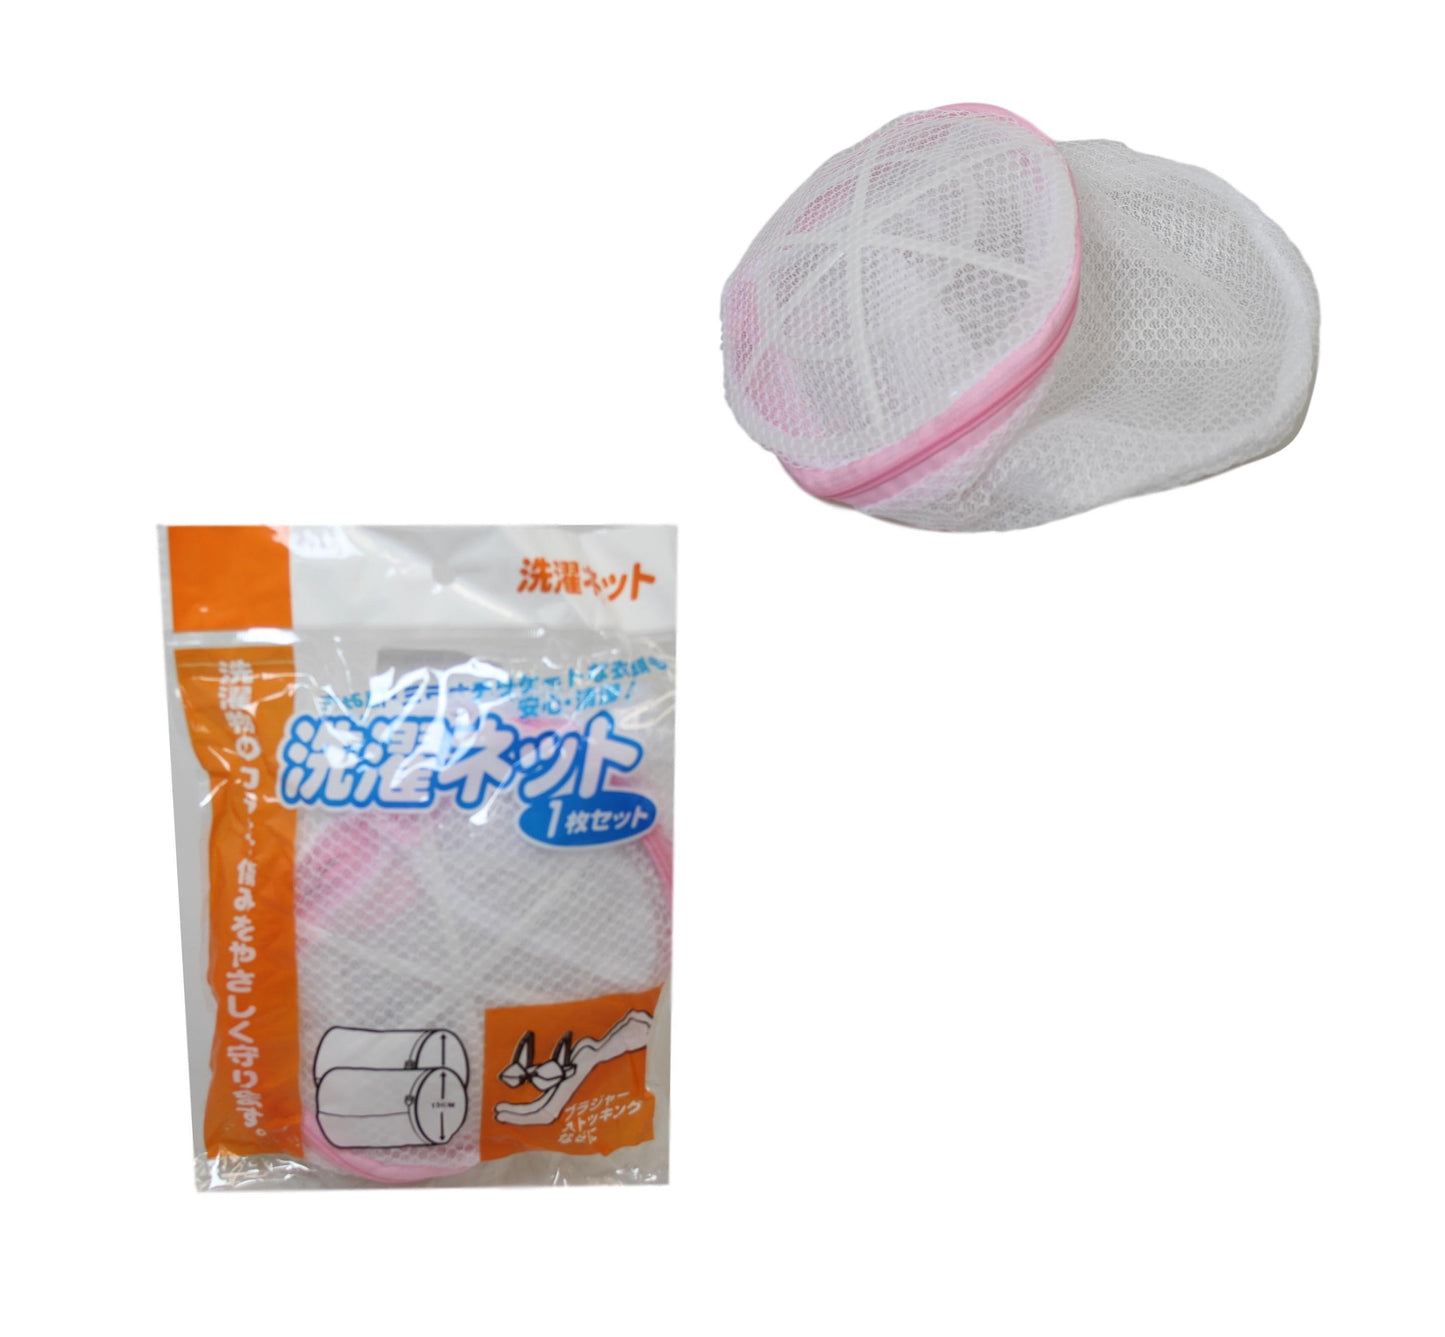 Washing Protective Bag Mesh Net Fabric Zipped Round Washing Bag 15cm 6096 (Large Letter Rate)